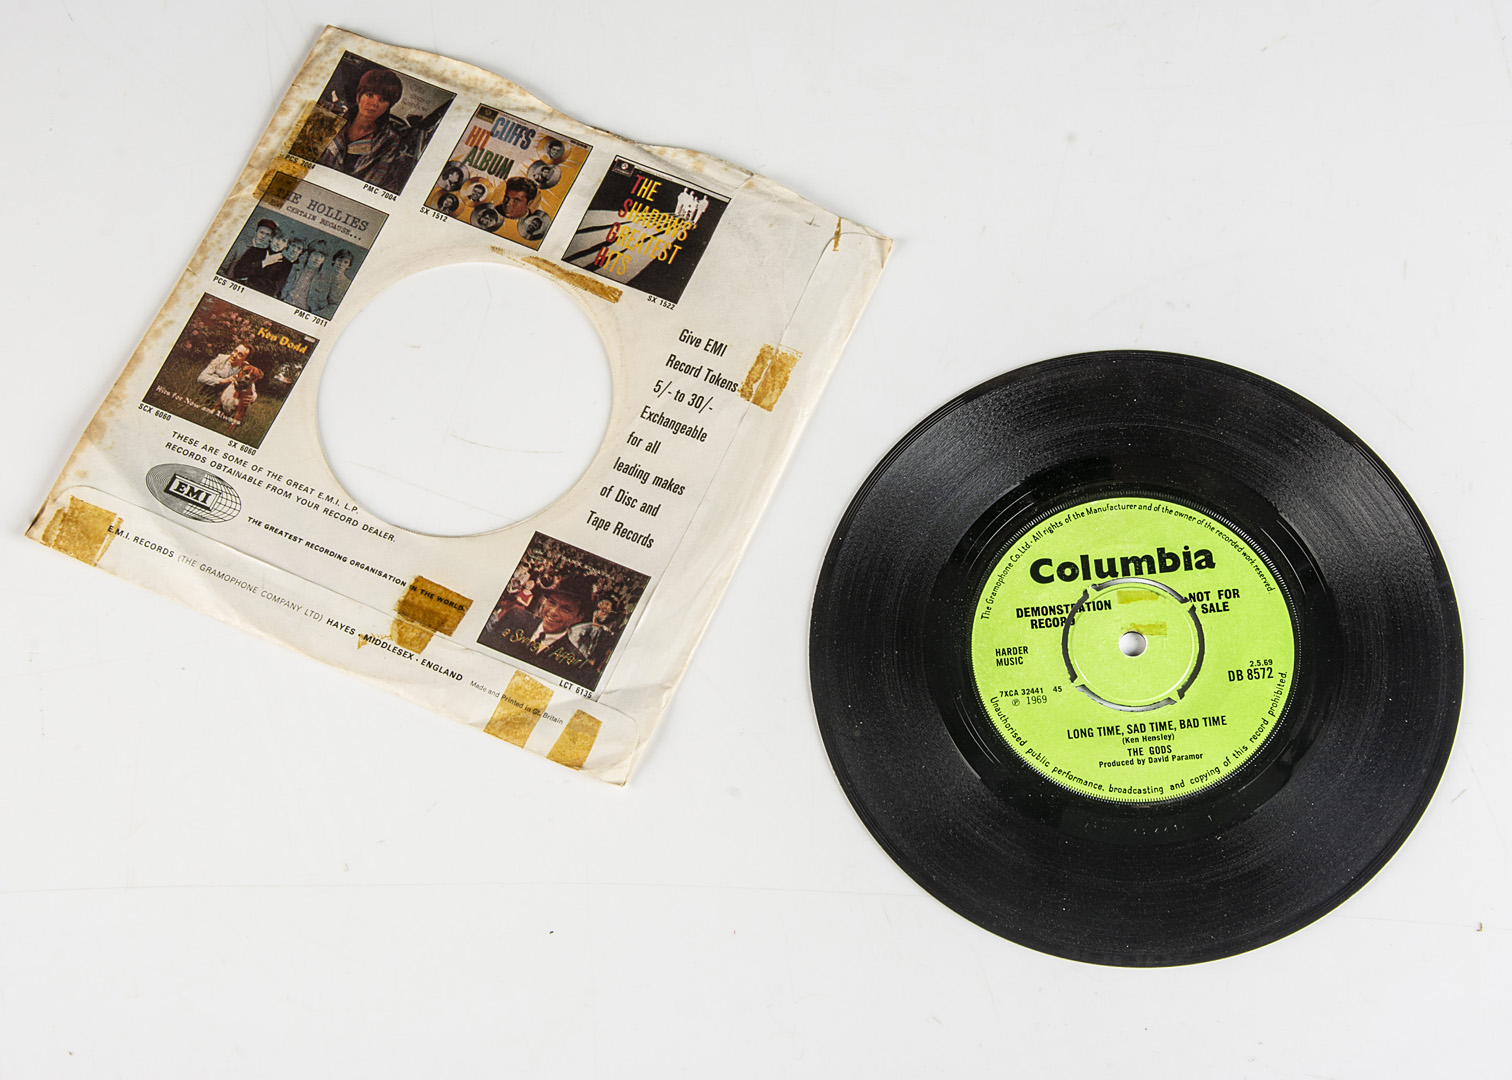 The Gods Demo 7" Single, Maria b/w Long Time Sad Time Bad Time 7" Single - UK 7" Demo release 1969 - Image 2 of 2